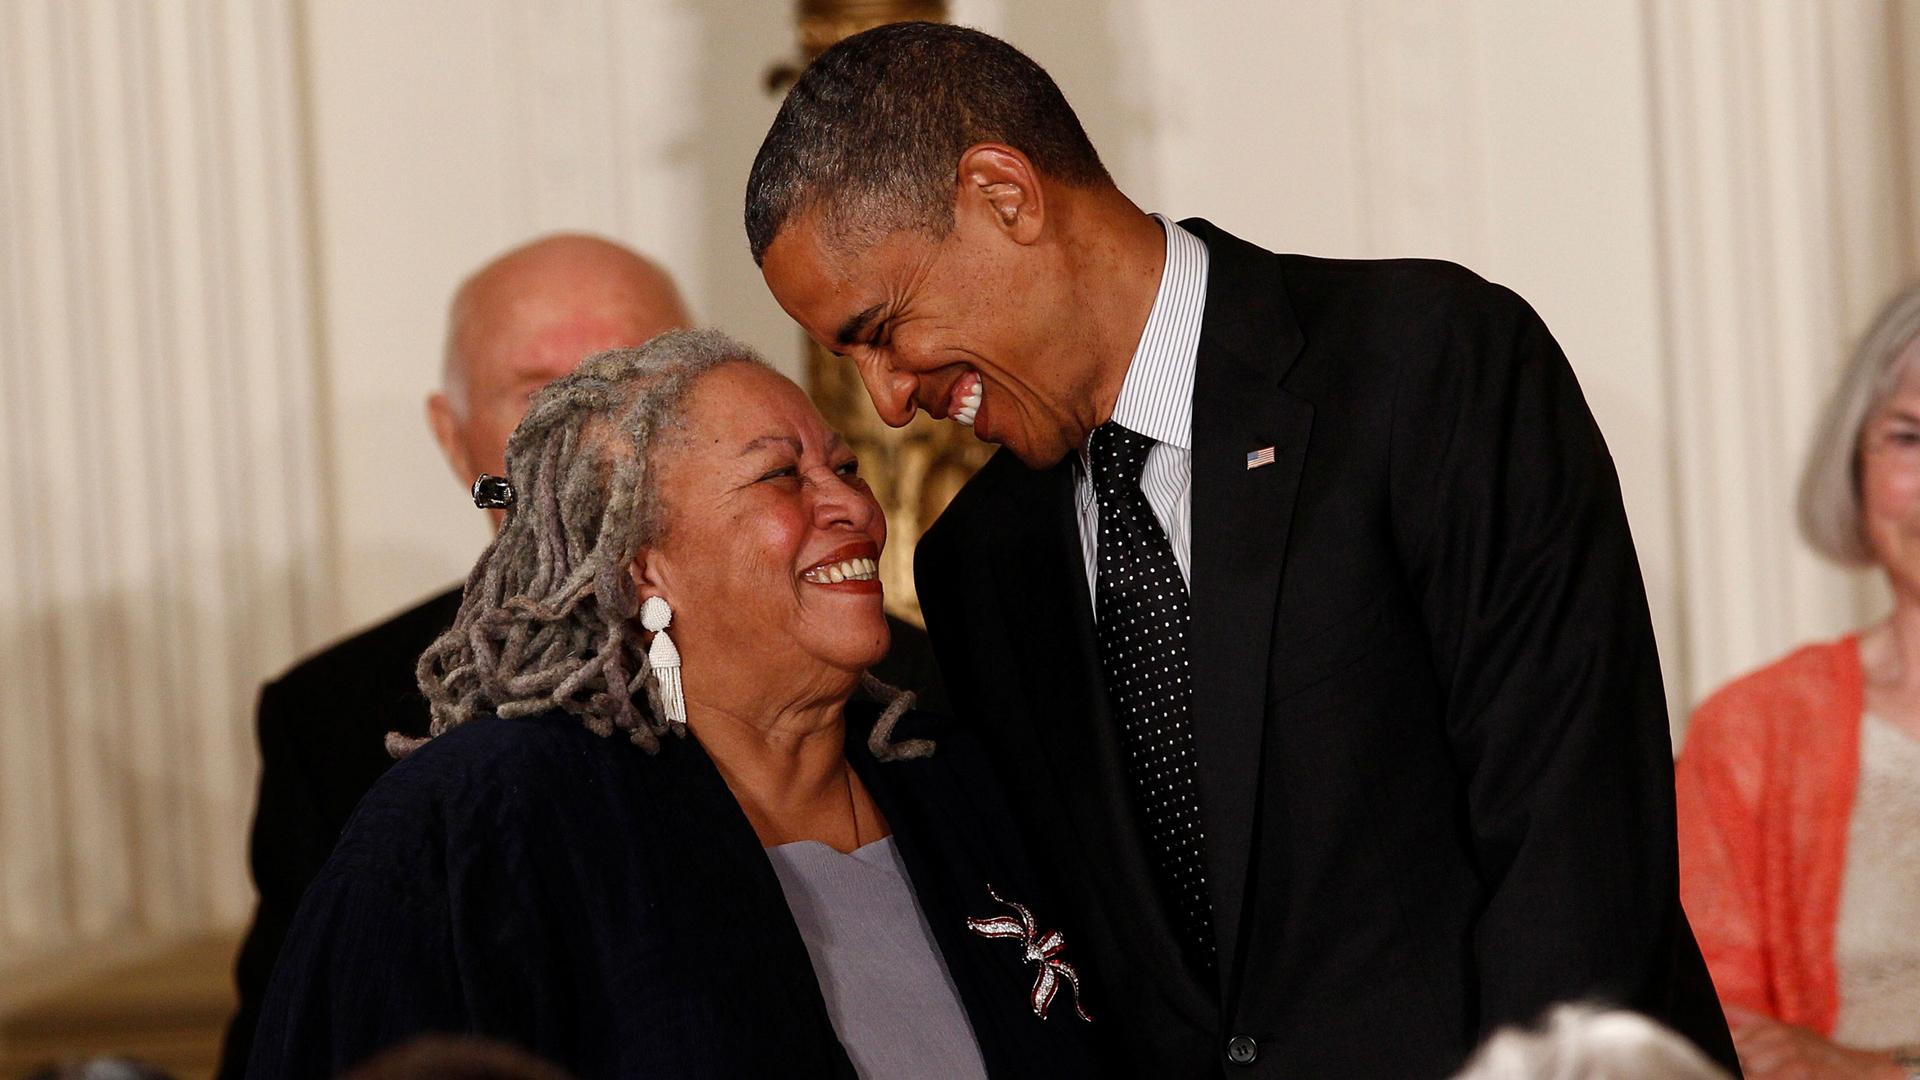 Writer Toni Morrison and Barack Obama smile at each other